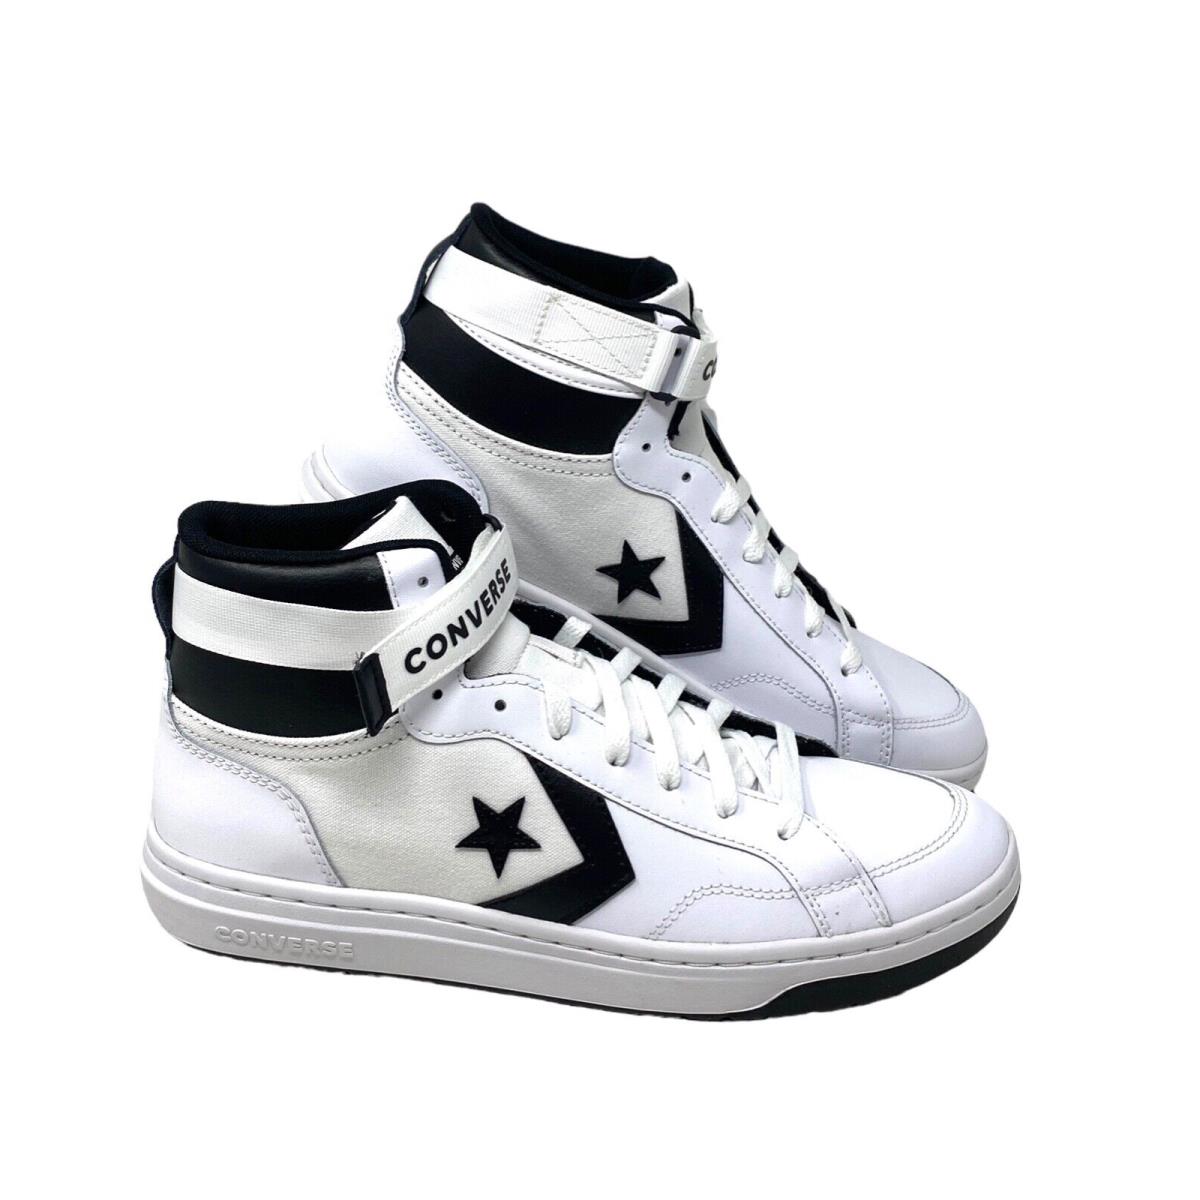 Converse Pro Blaze V2 Mid Top White Black Leather Skate Shoes Men s Size A00985C